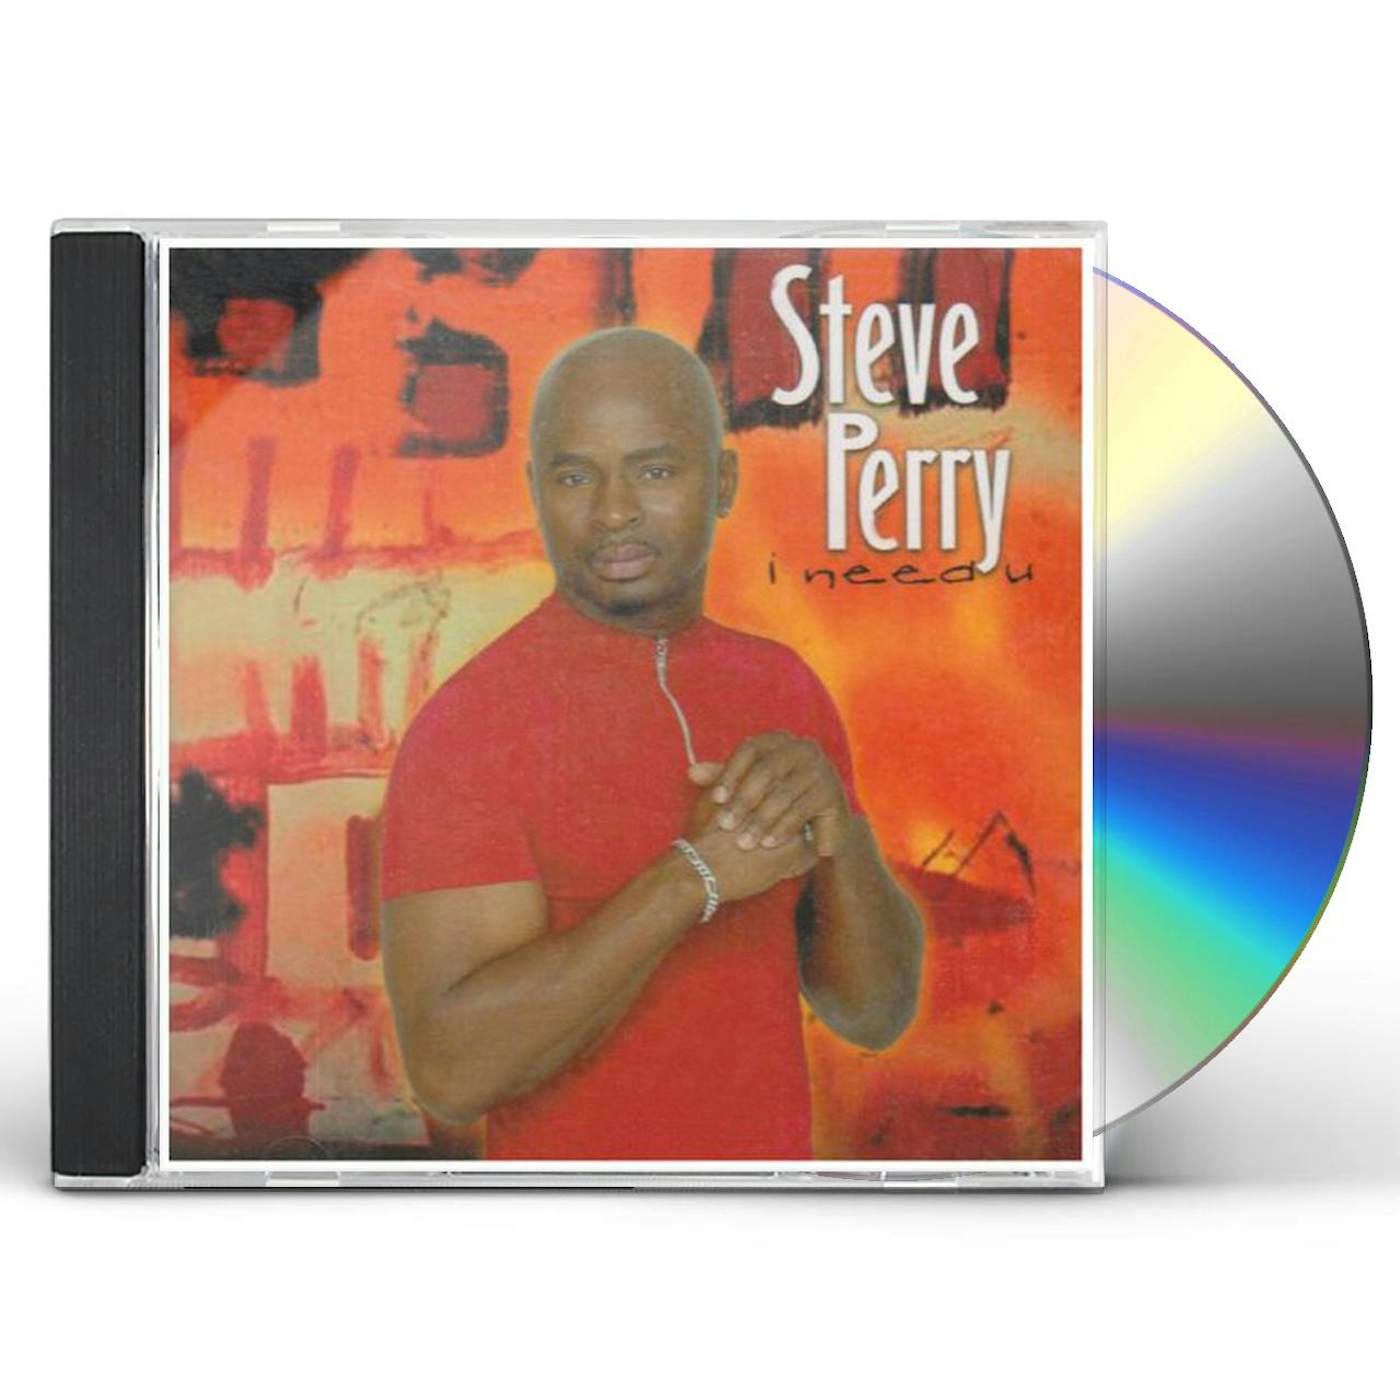 Steve Perry I NEED U CD